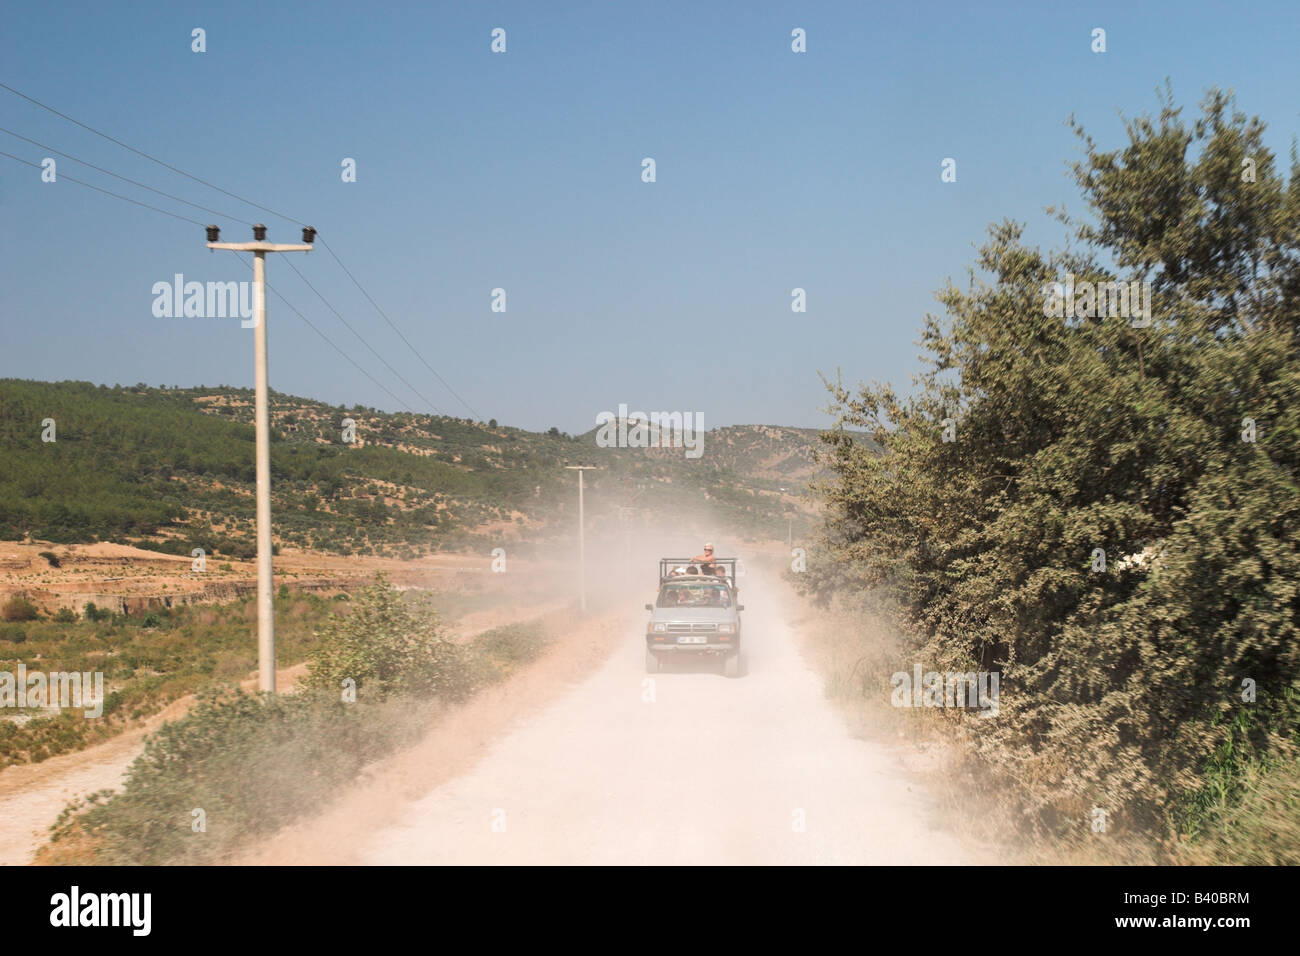 Jeep safari 4x4 travelling along a dusty road, Bodrum, Turkey Stock Photo